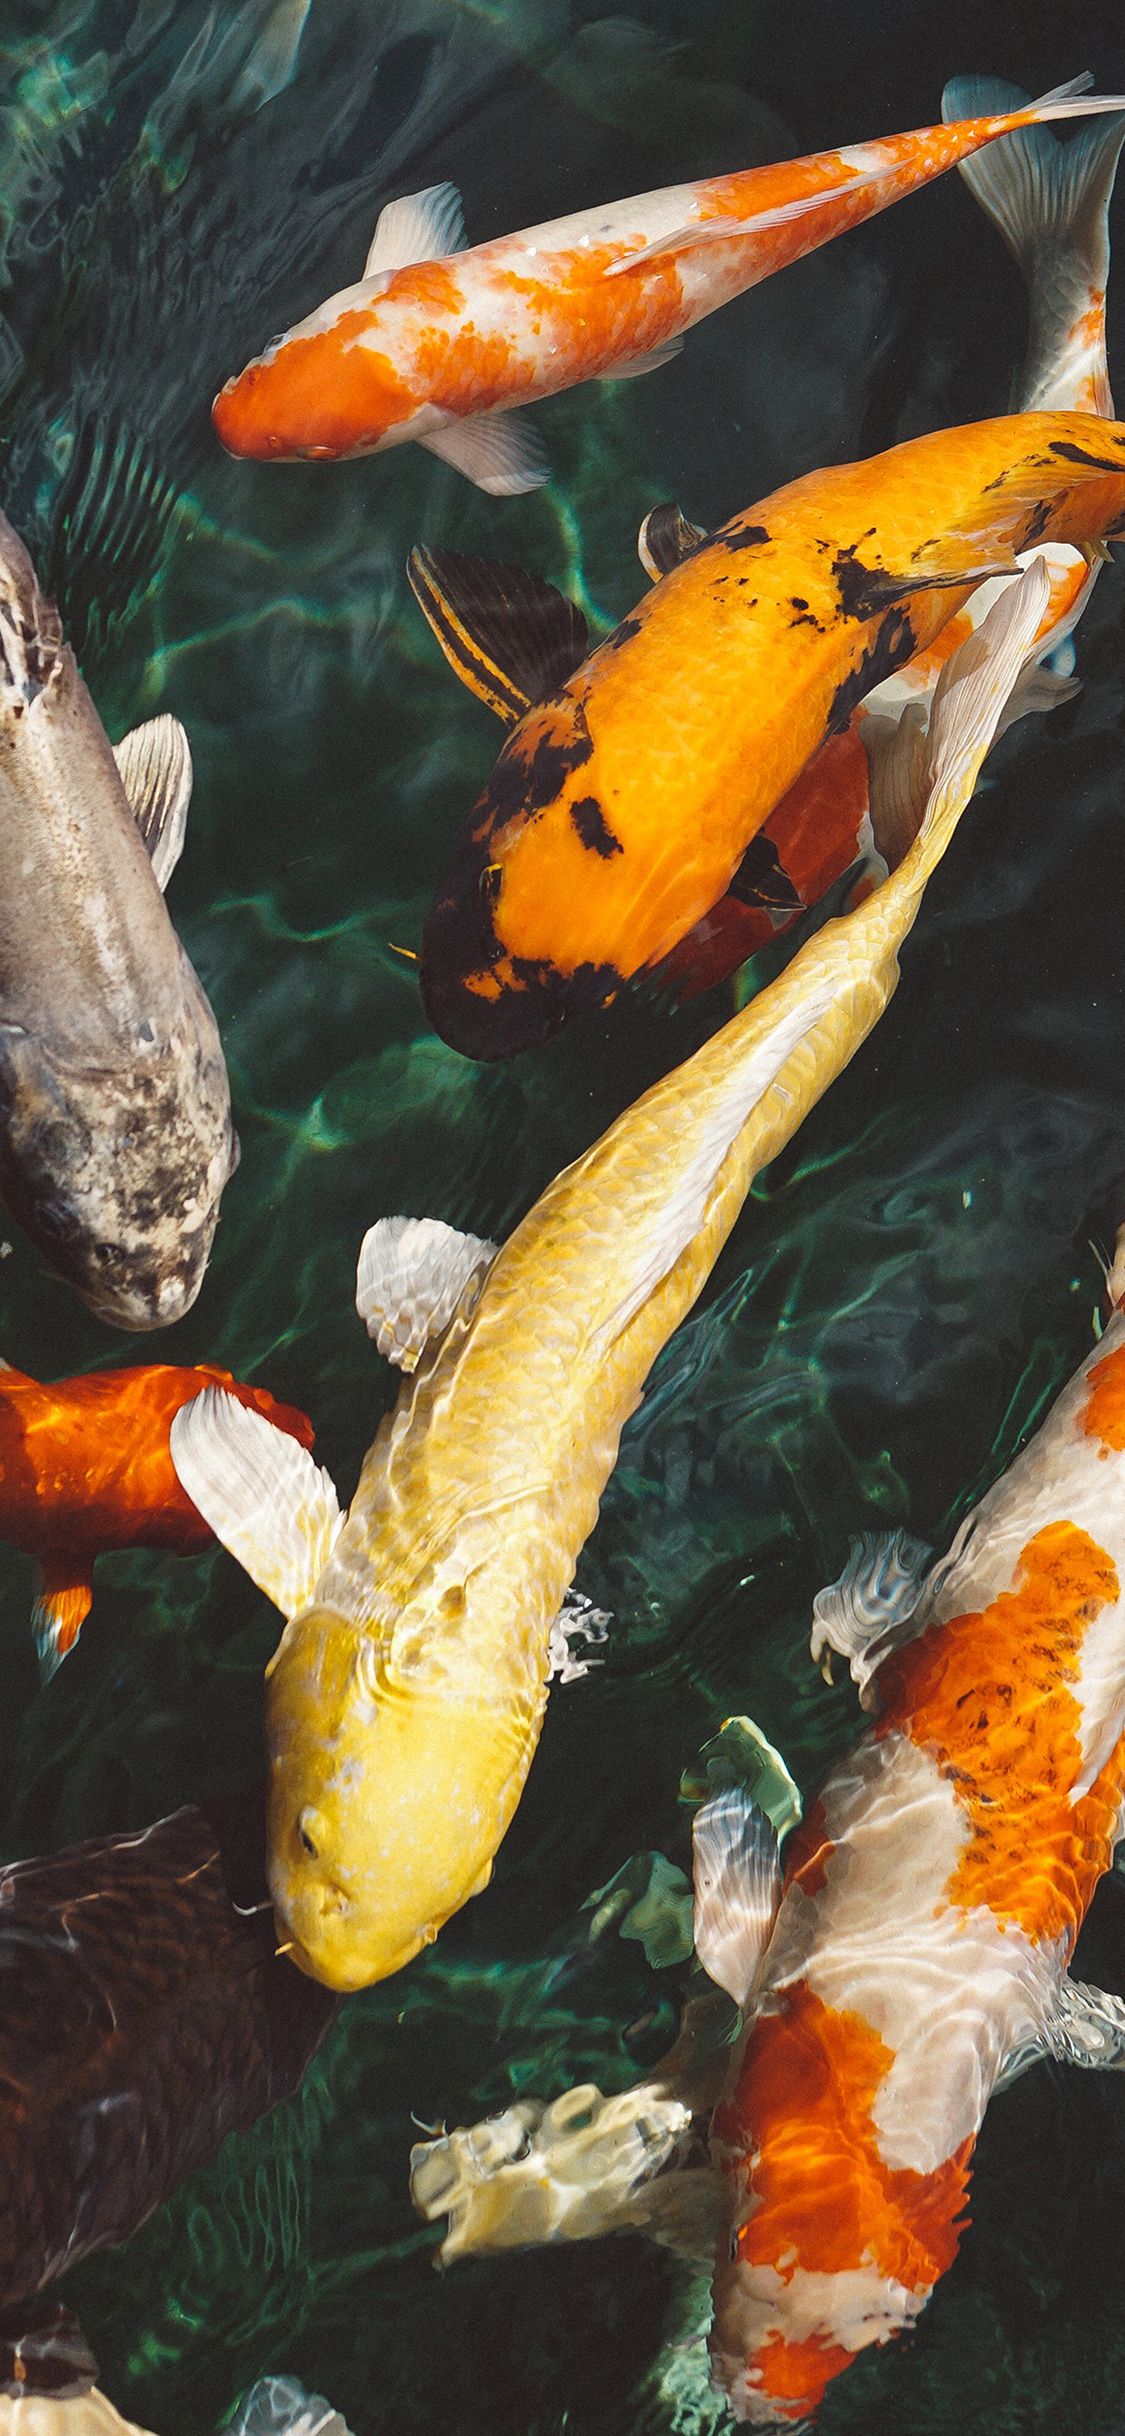 iPhone X wallpaper. fish water animal swim